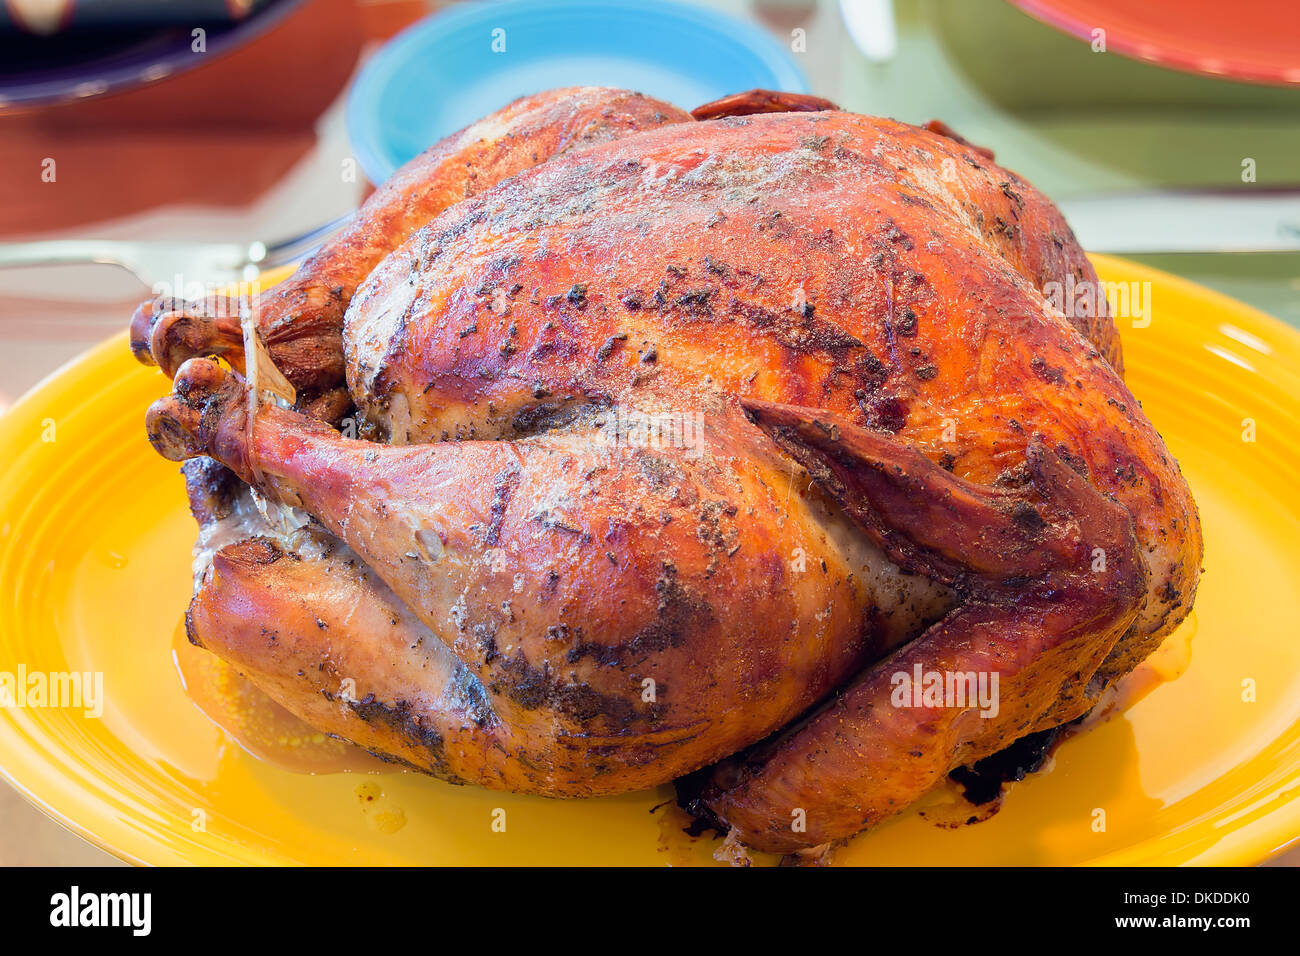 Cooked Roast Turkey on Yellow Platter for Thanksgiving Dinner Stock Photo